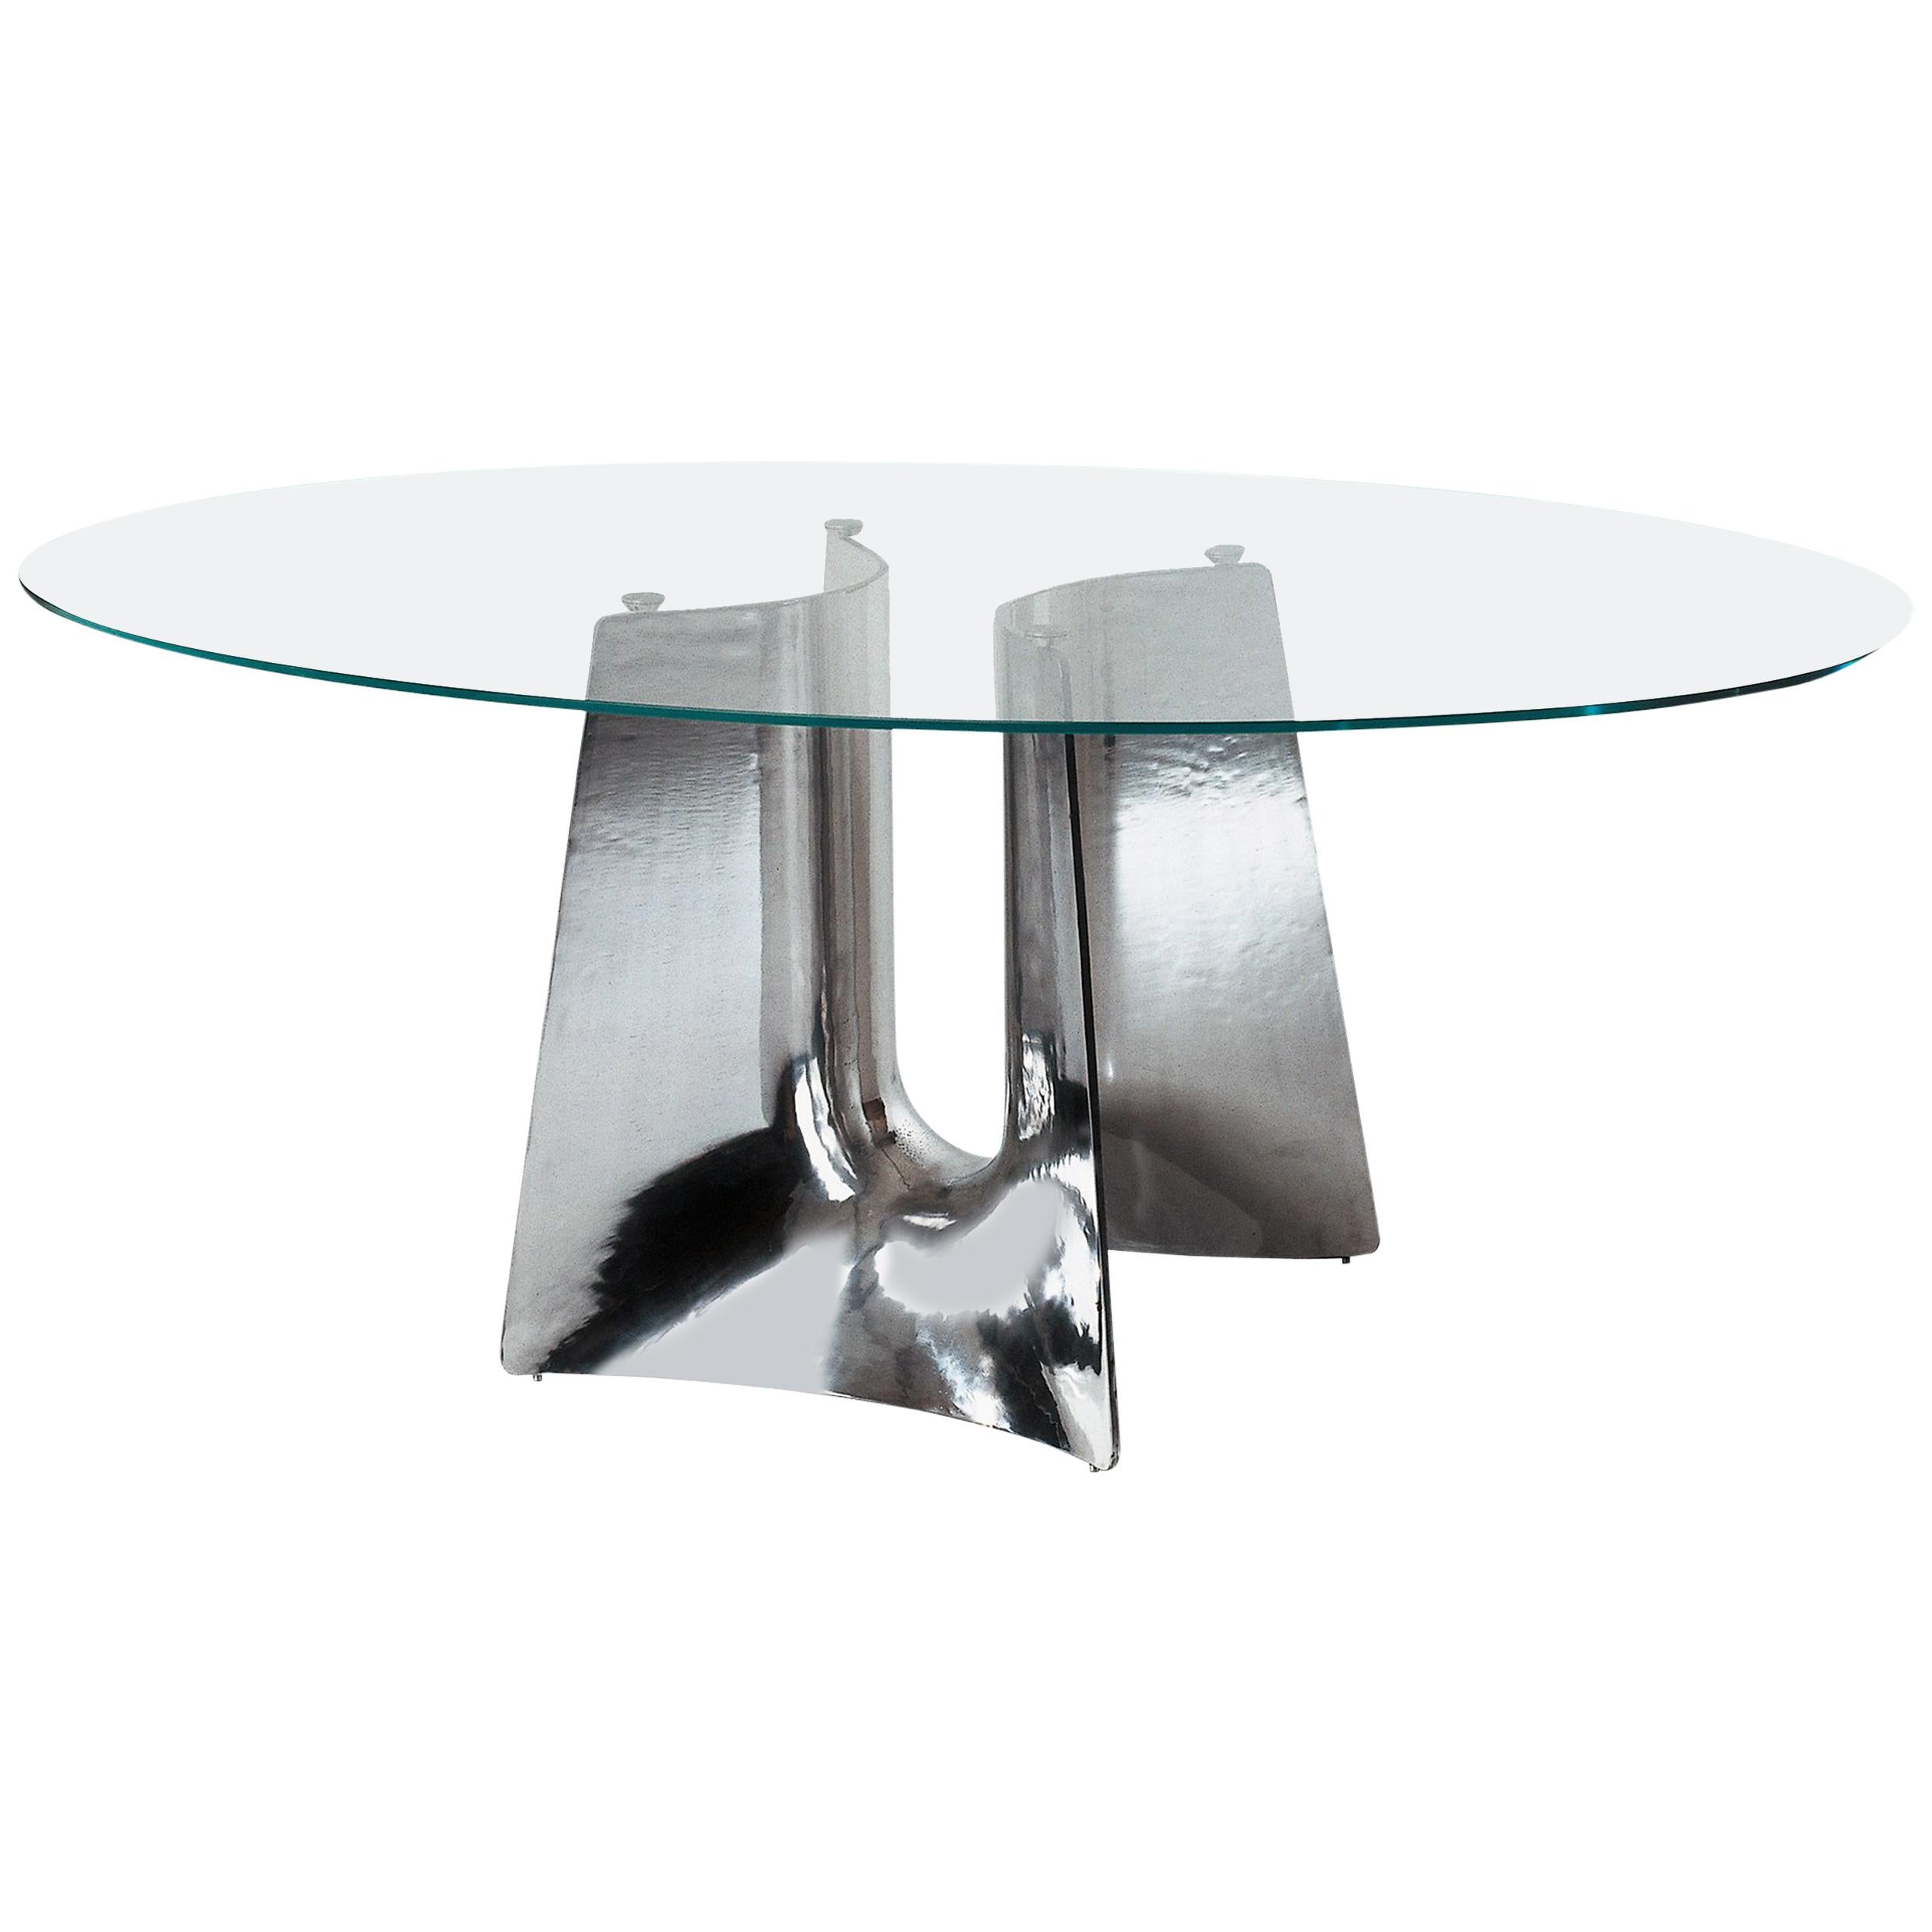 Baleri Italia Bentz High Elliptical Aluminum Table with Glass Top by Jeff Miller For Sale